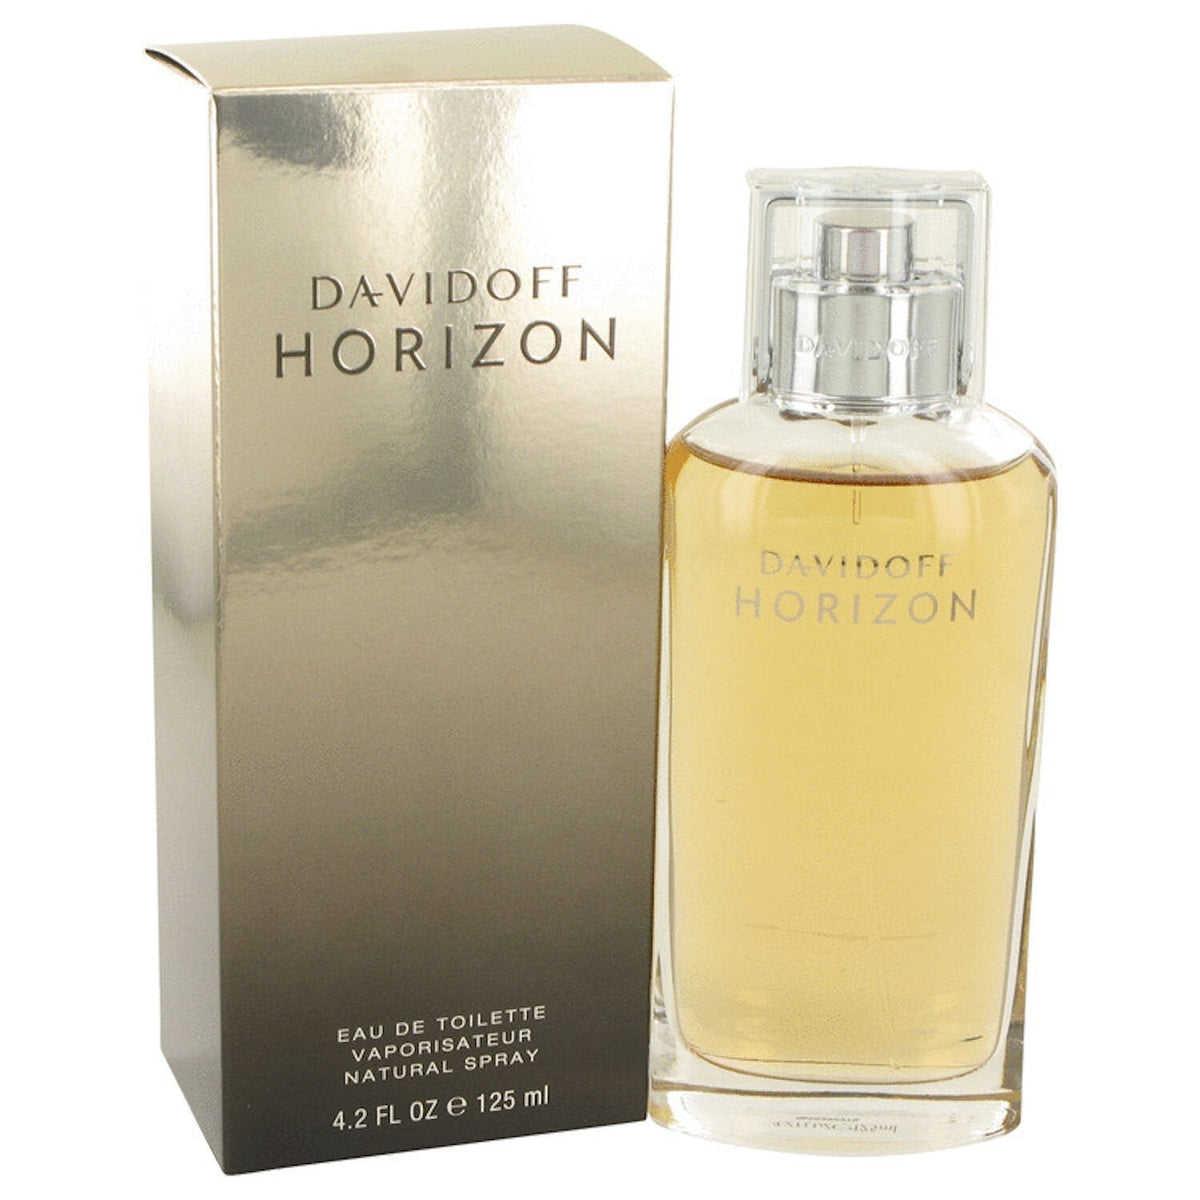 Davidoff Horizon Men EDT 125 ml - Makeup Stash Pakistan - Davidoff